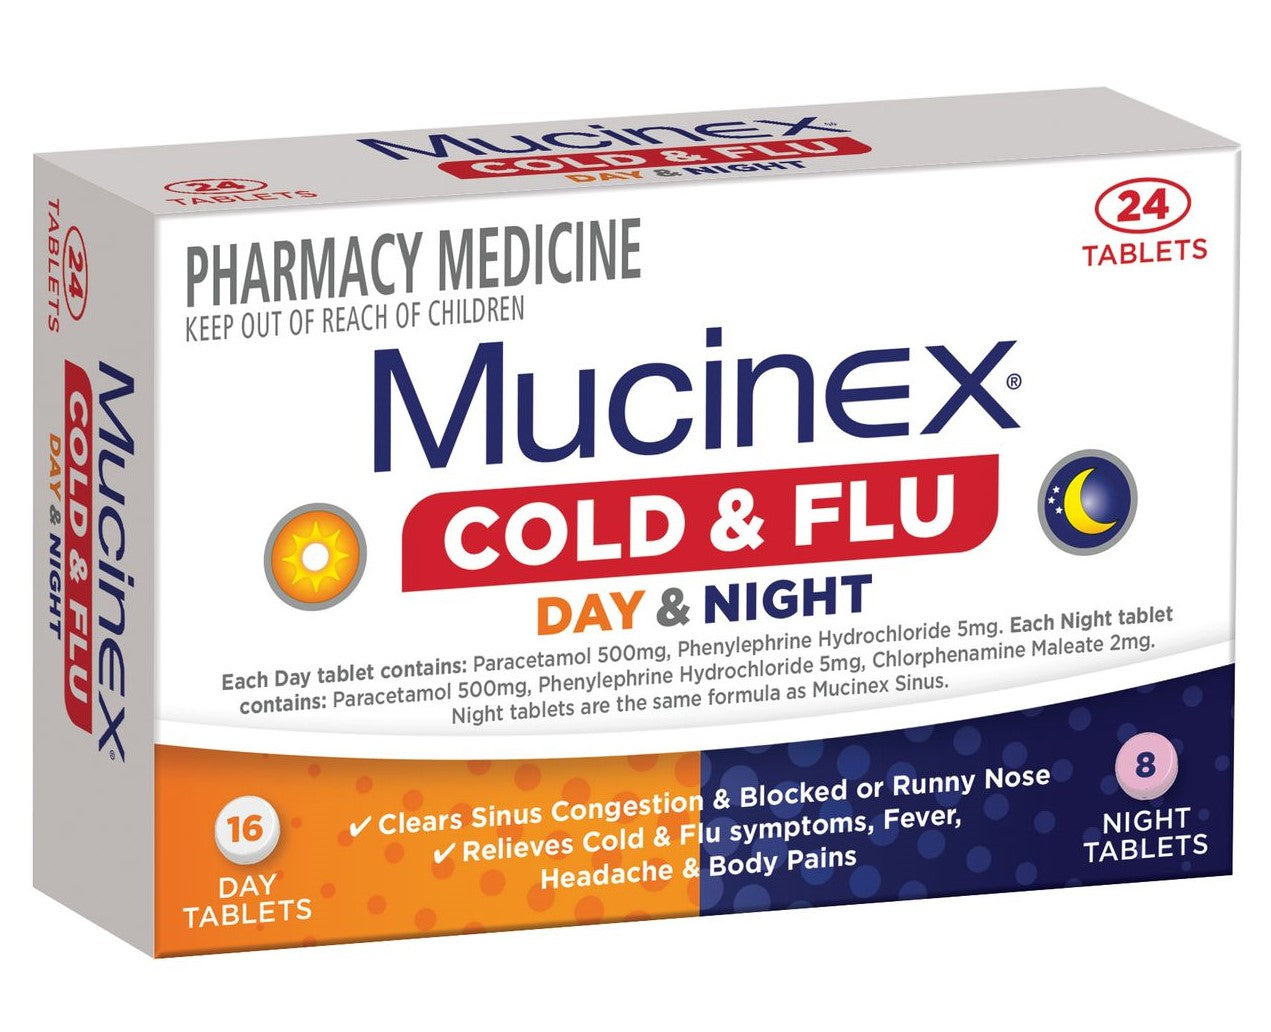 Mucinex Cold & Flu Day & Night Tablets 24